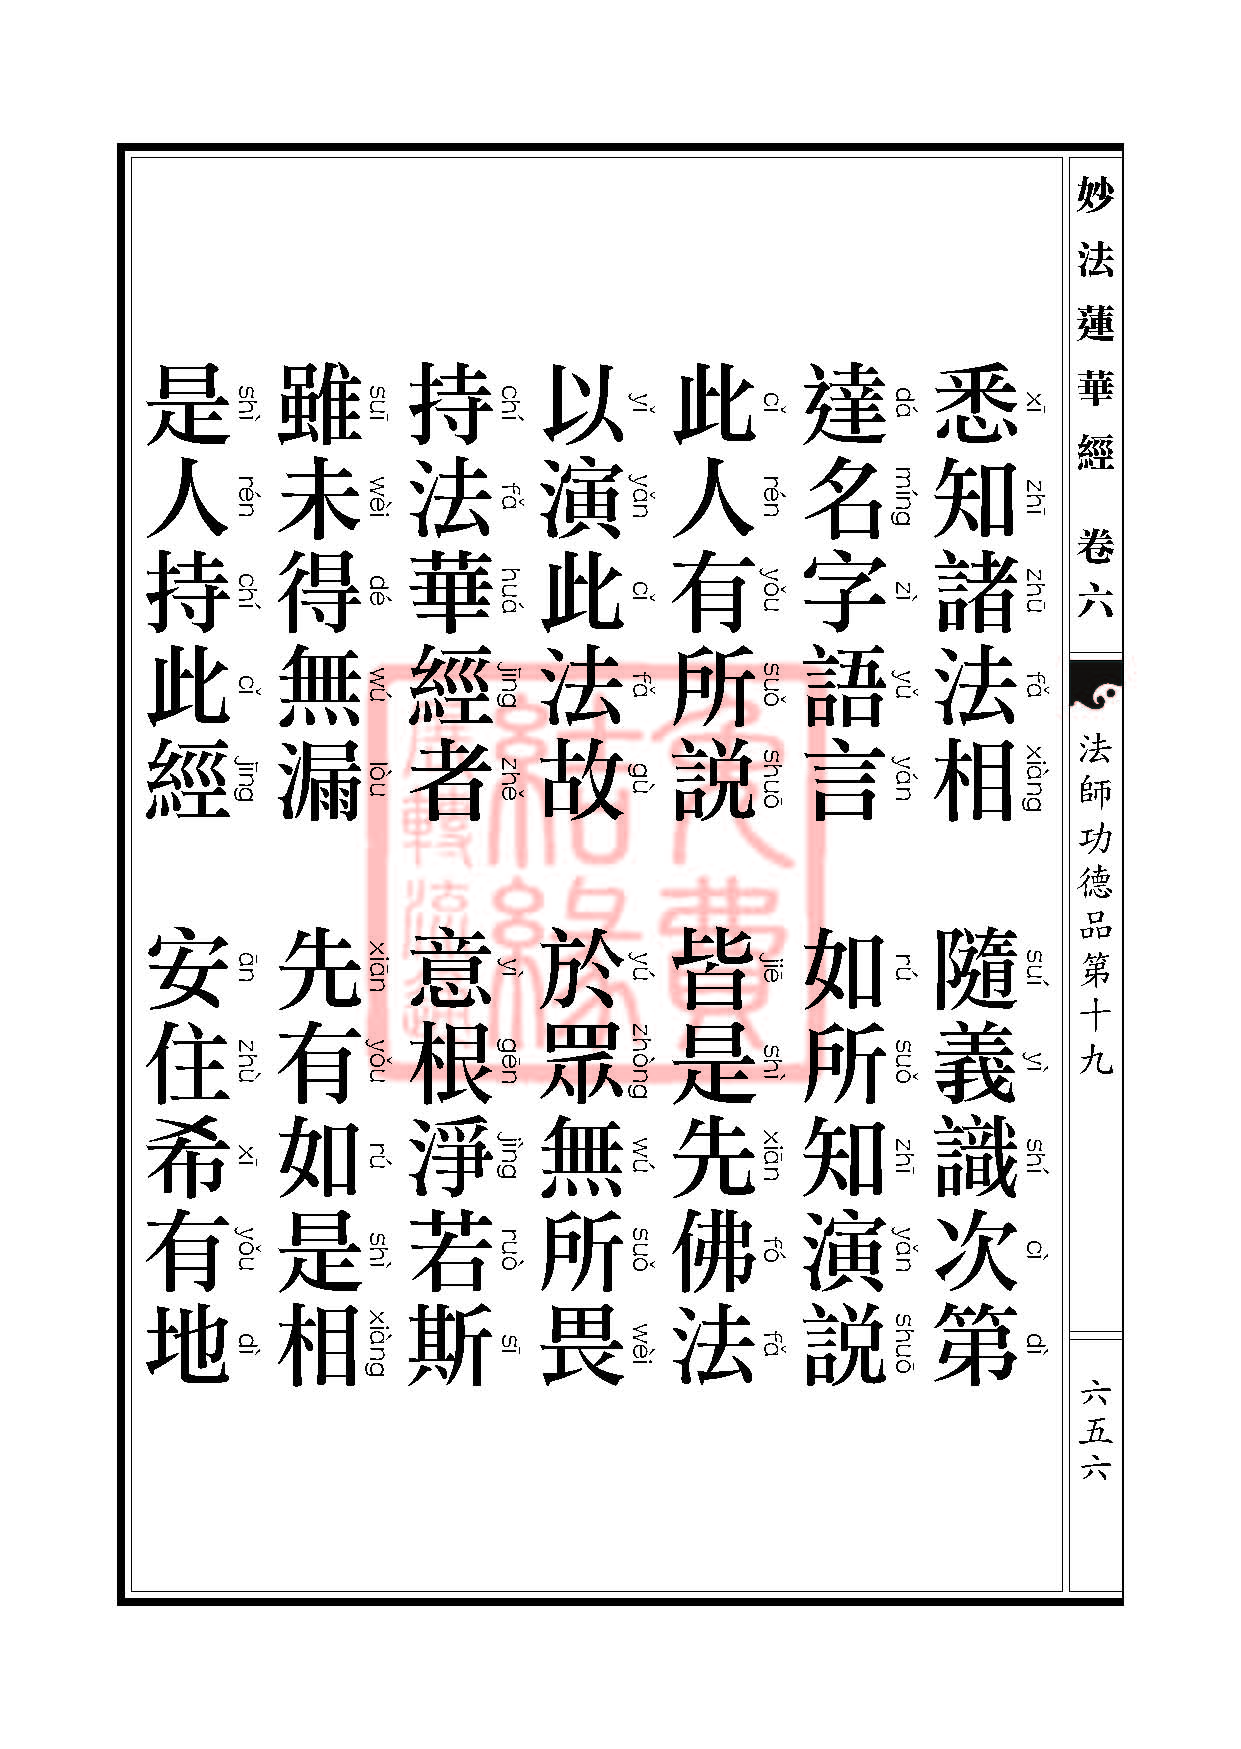 Book_FHJ_HK-A6-PY_Web_页面_656.jpg